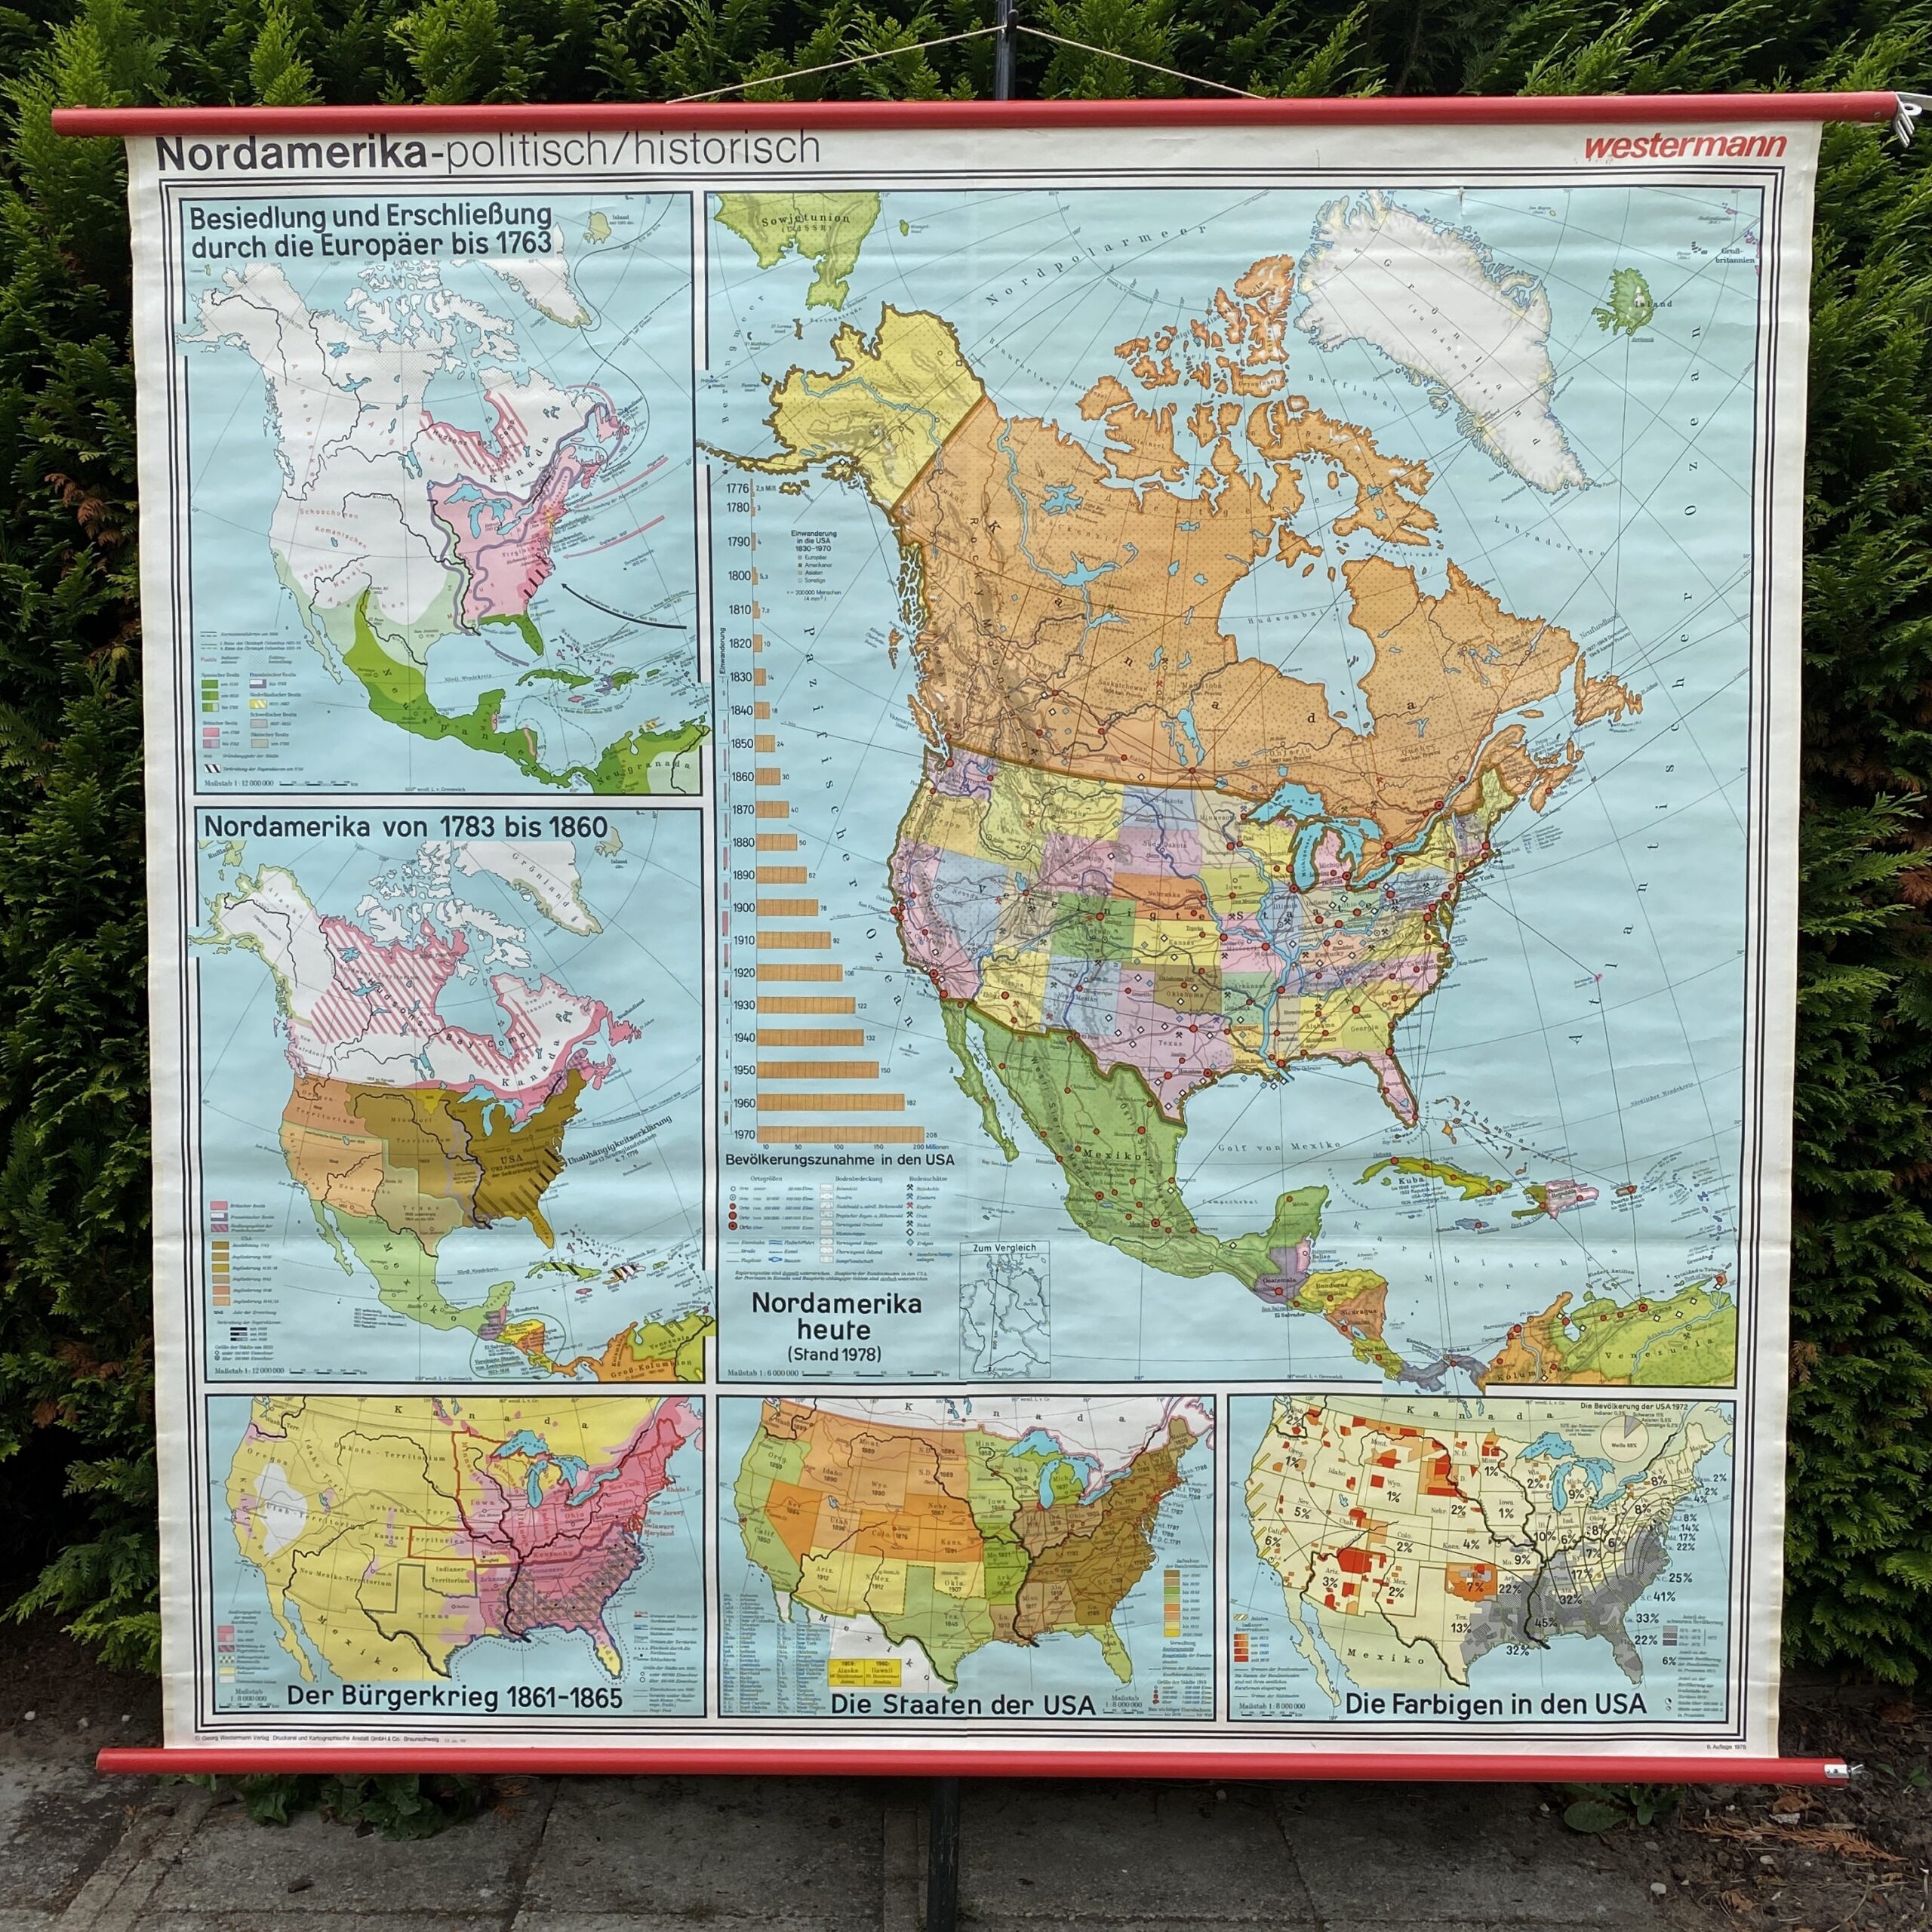 Grote wandkaart Nordamerika politisch/historisch Noord-Amerika